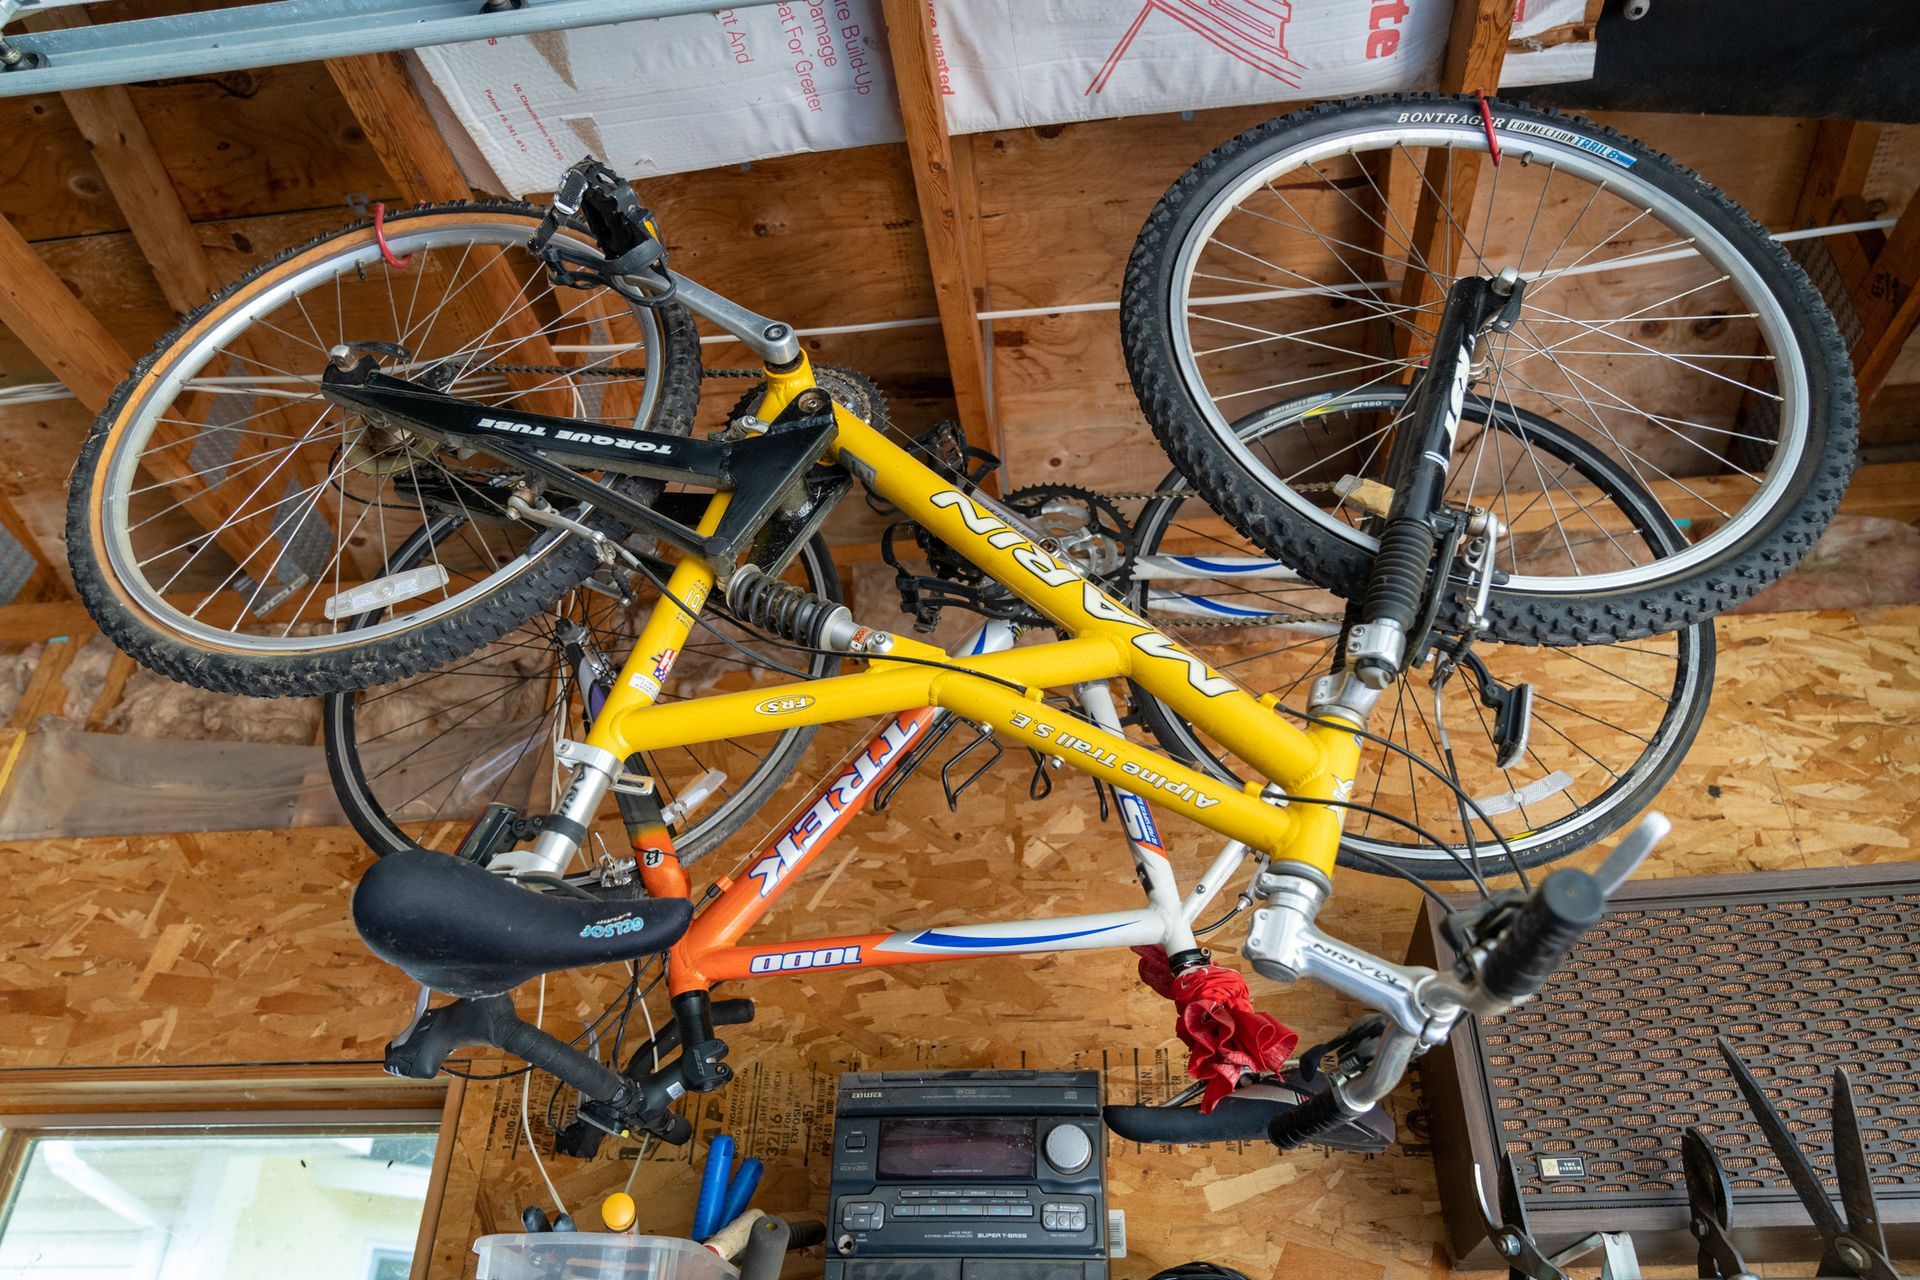 Storing Bikes in your Garage